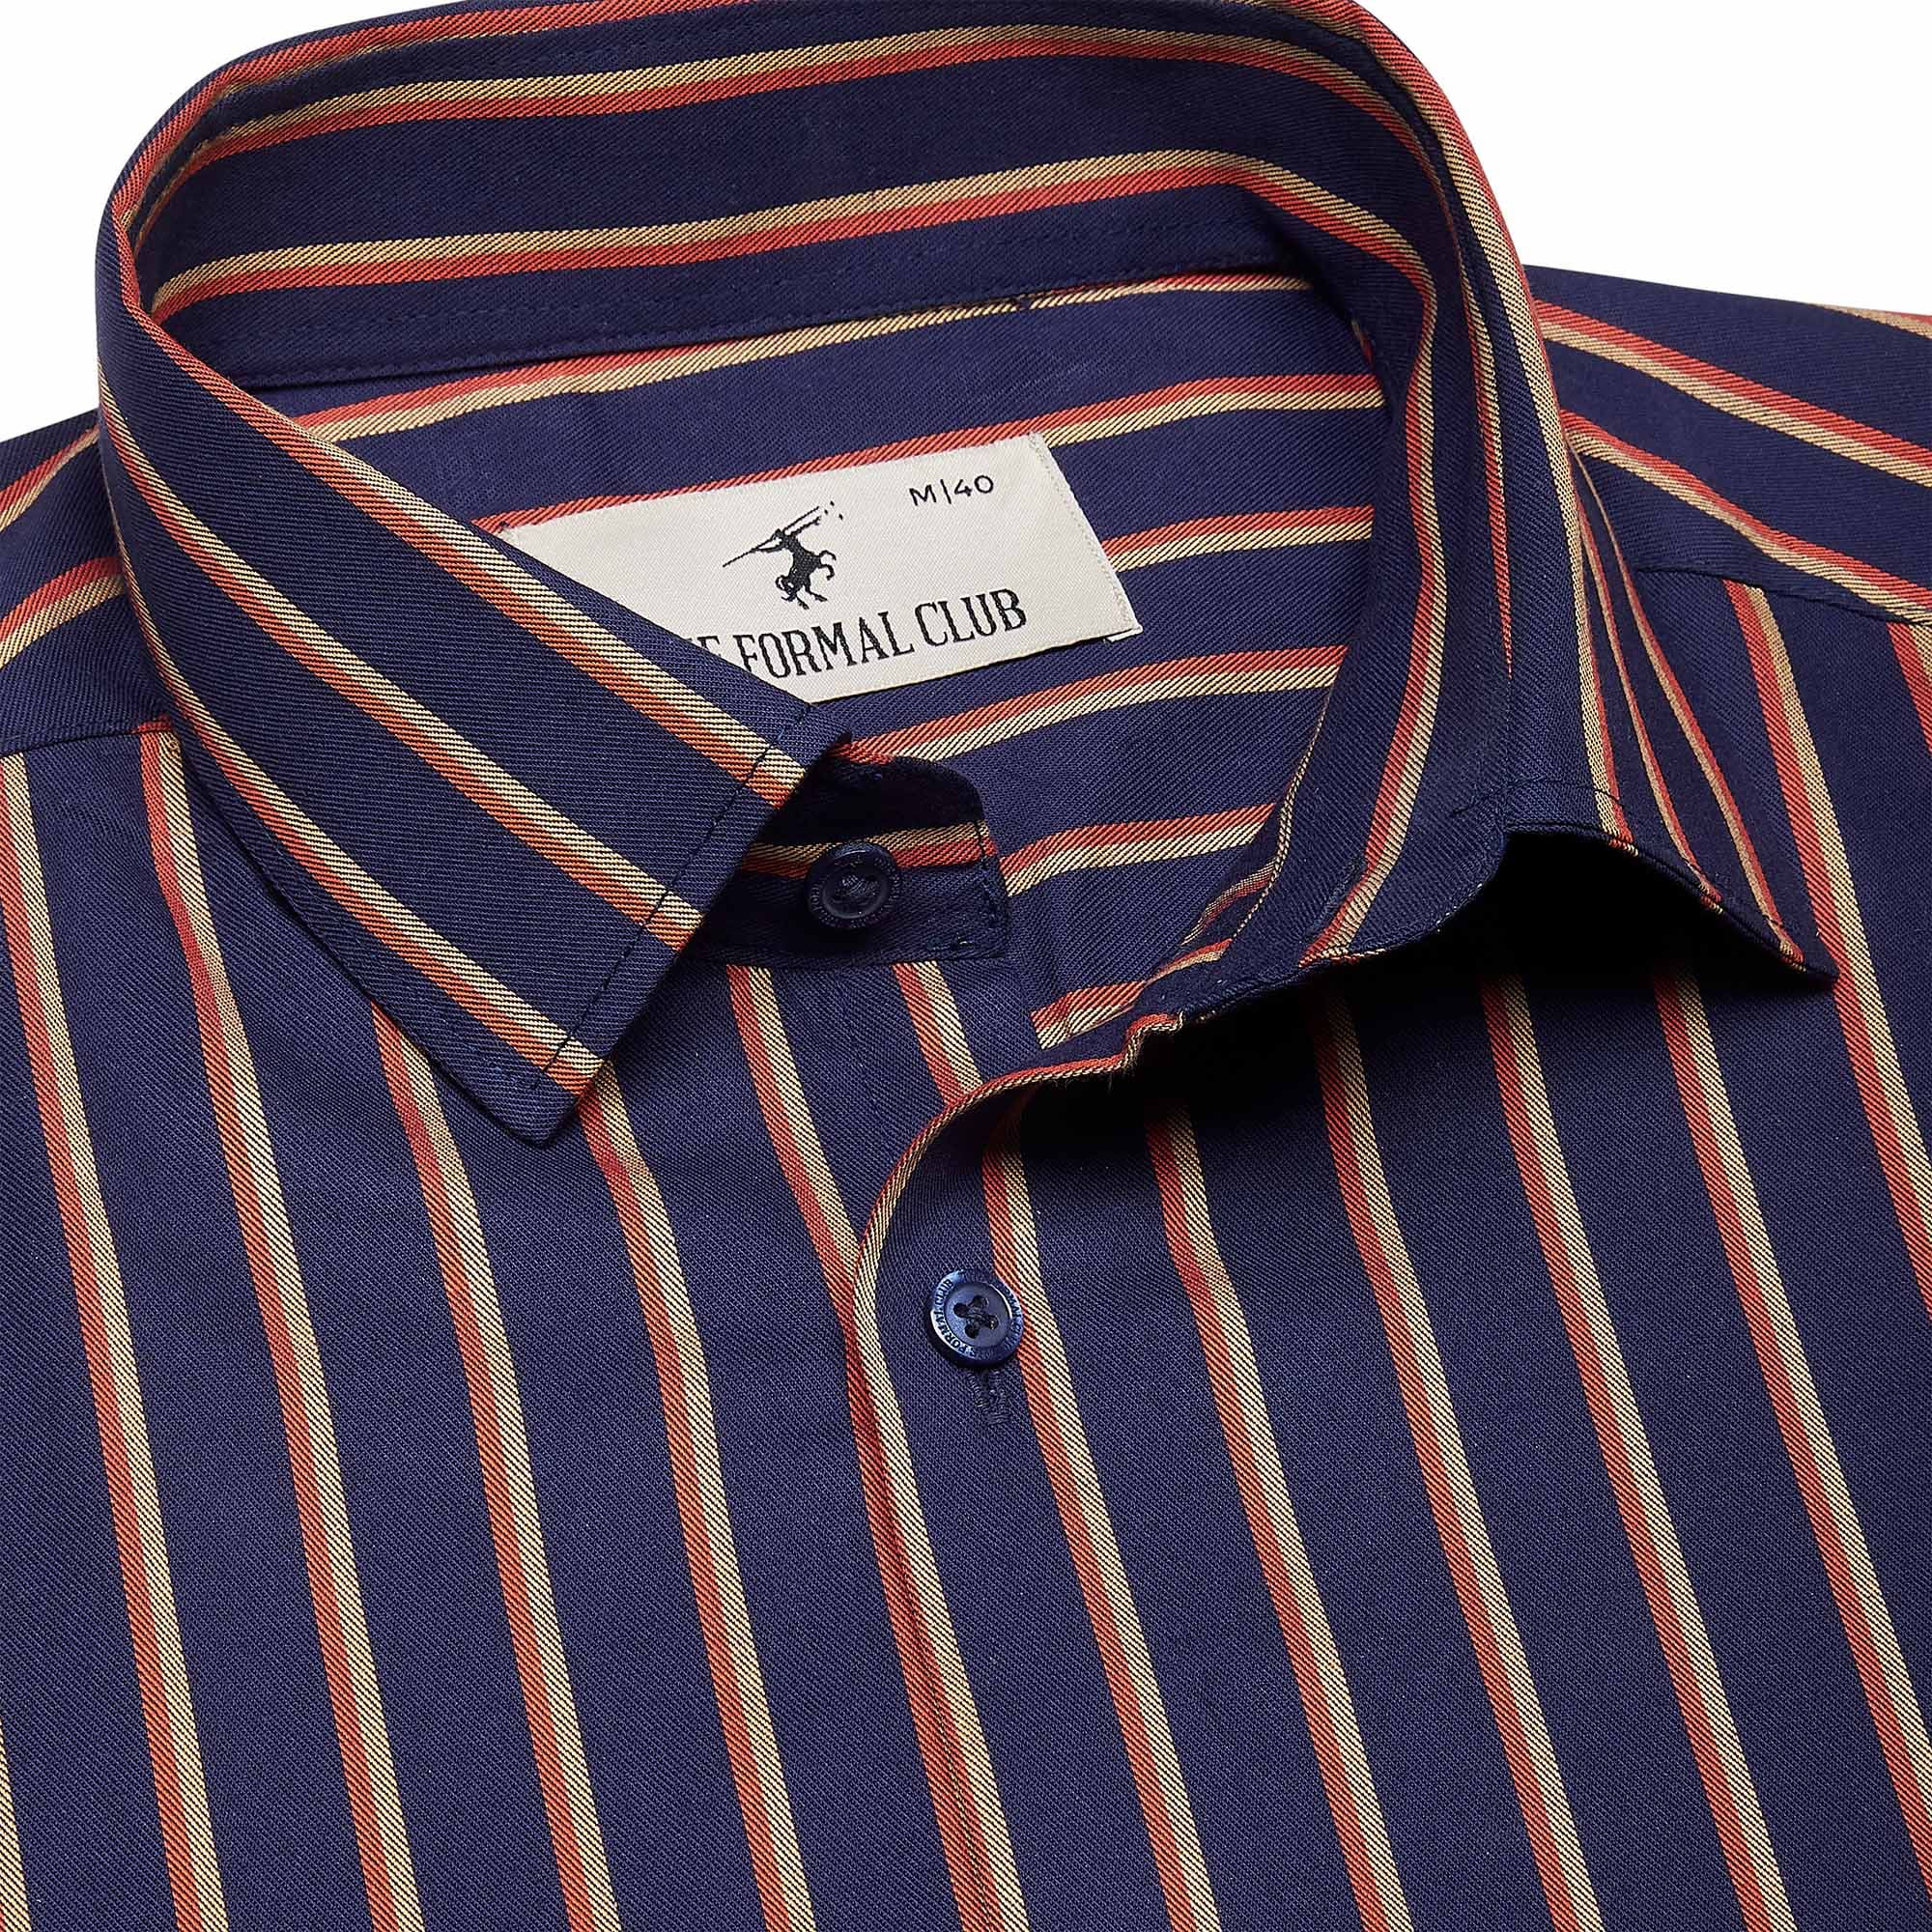 Prestige Stripe Shirt In Navy Blue - The Formal Club